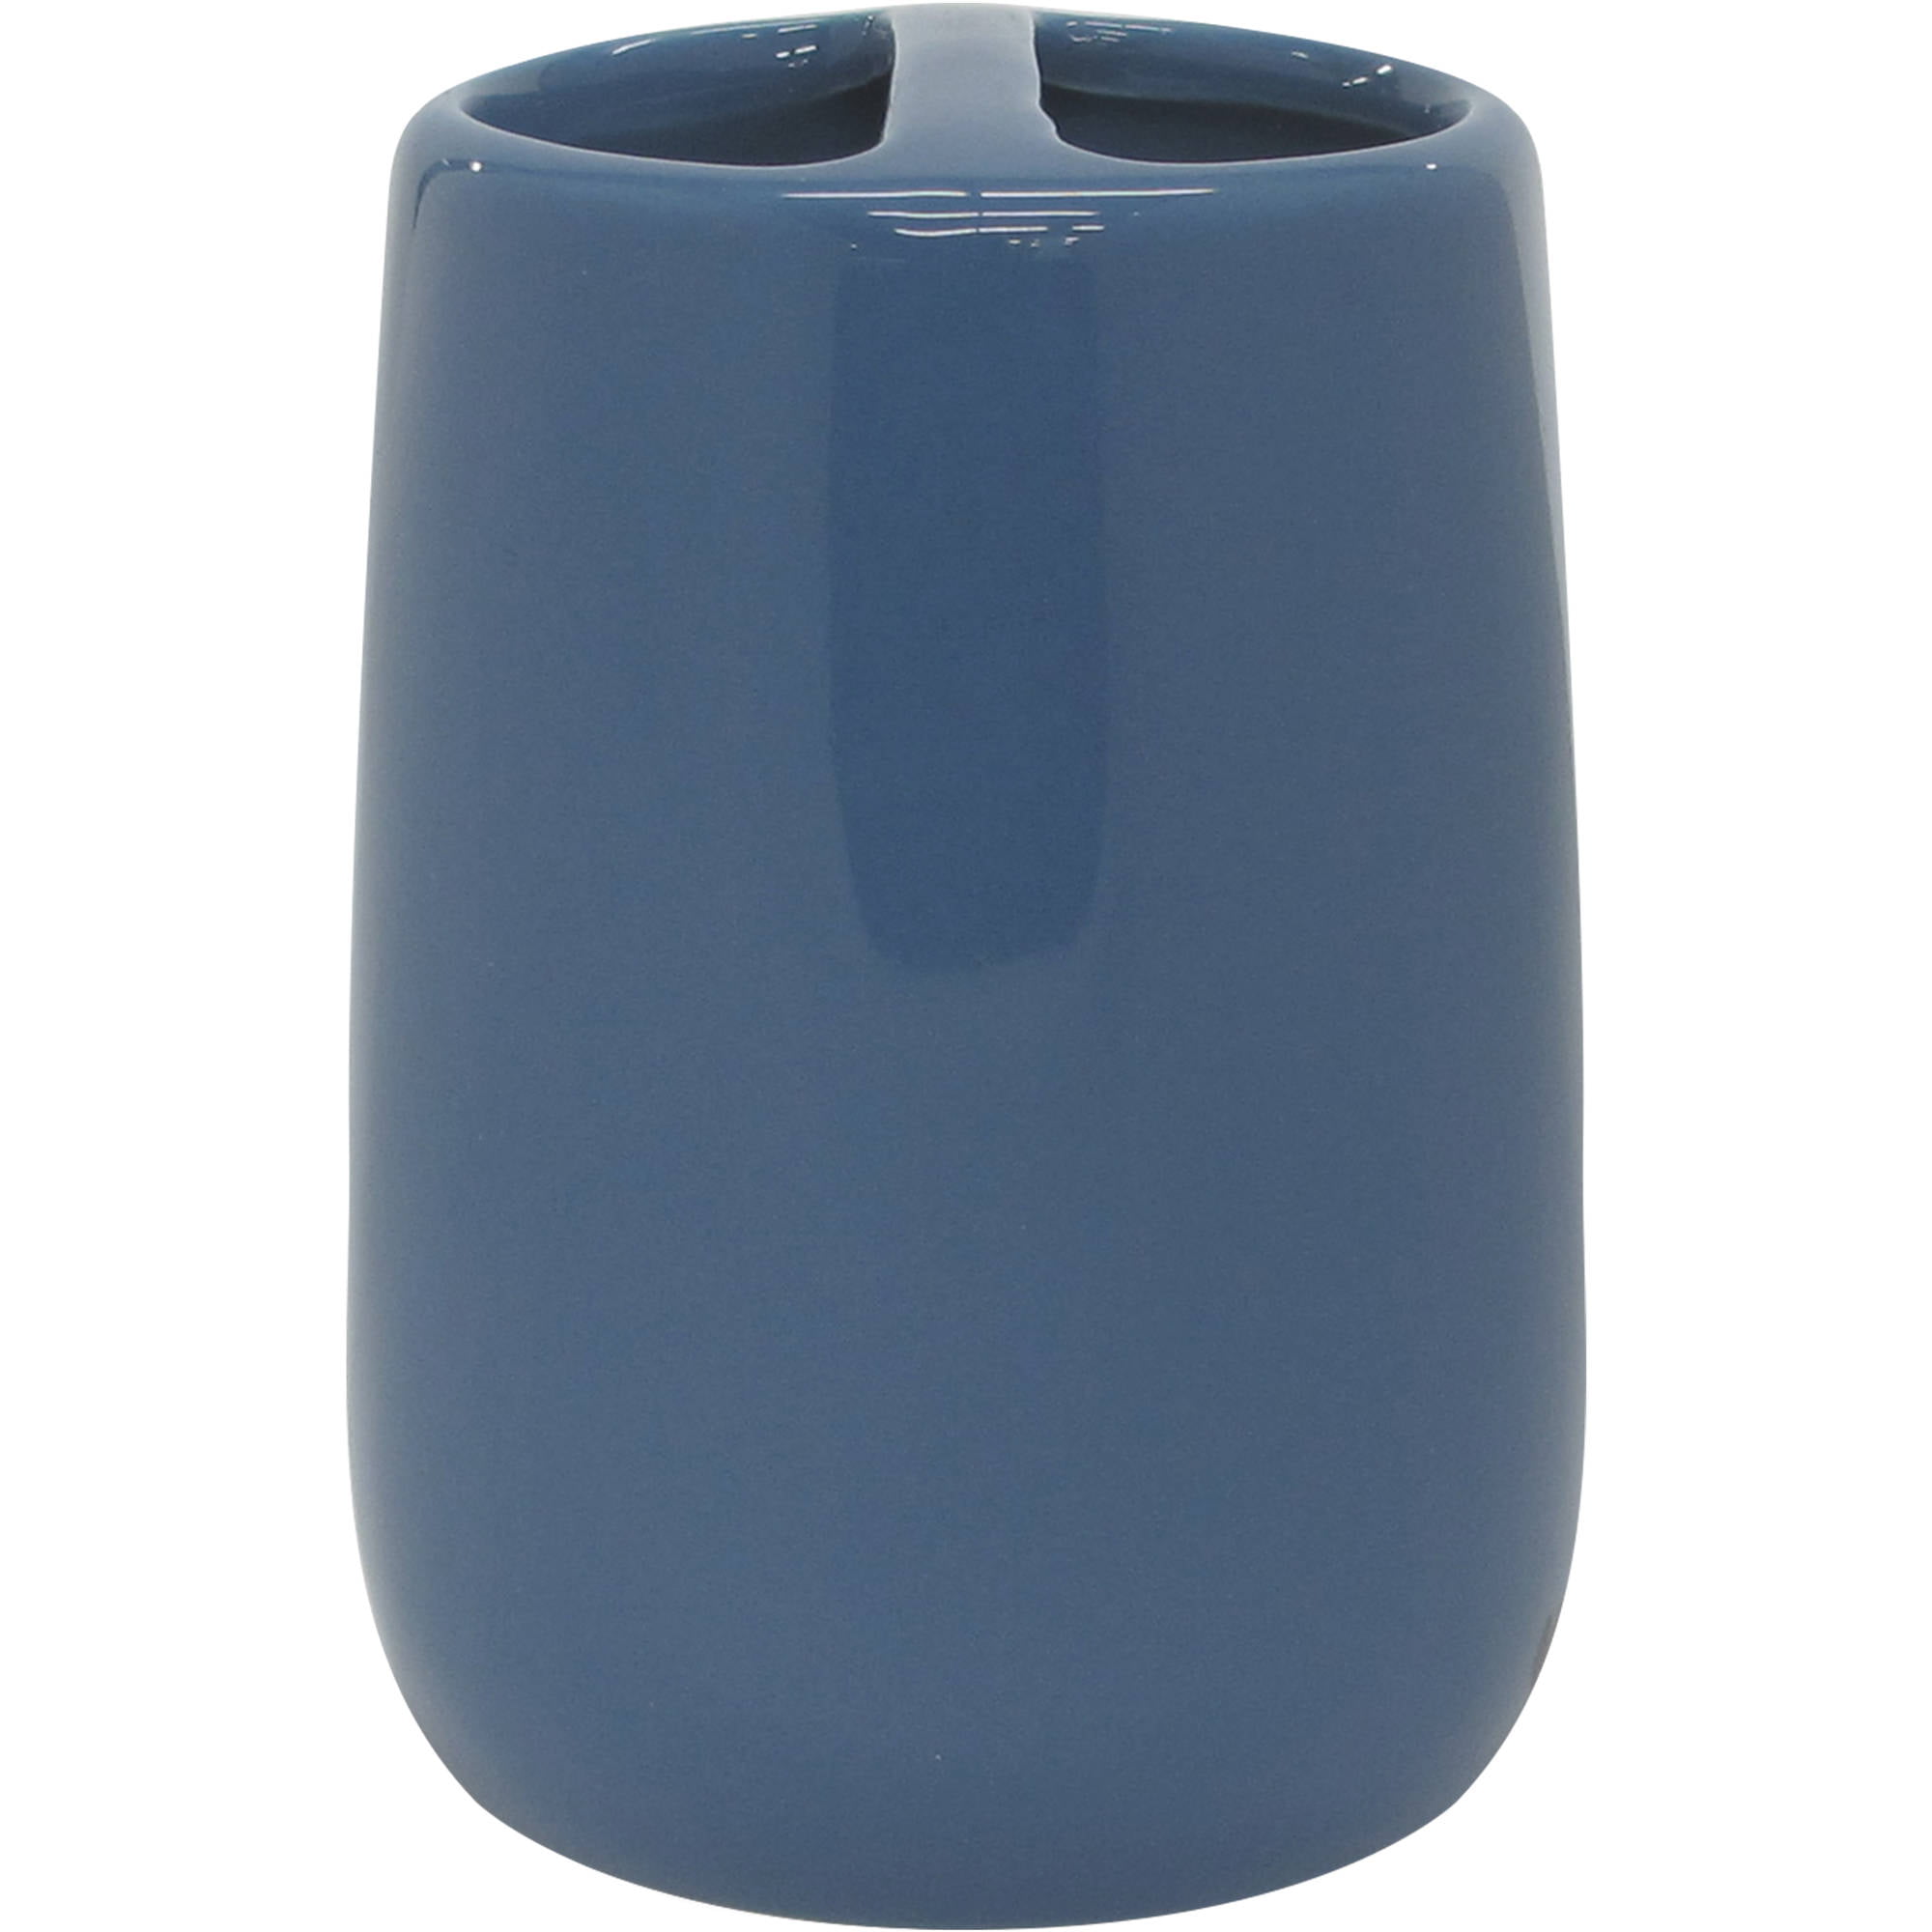 Galzone Toothbrush Holder Mug Cup in Black/Grey/White/Sand/Blue 